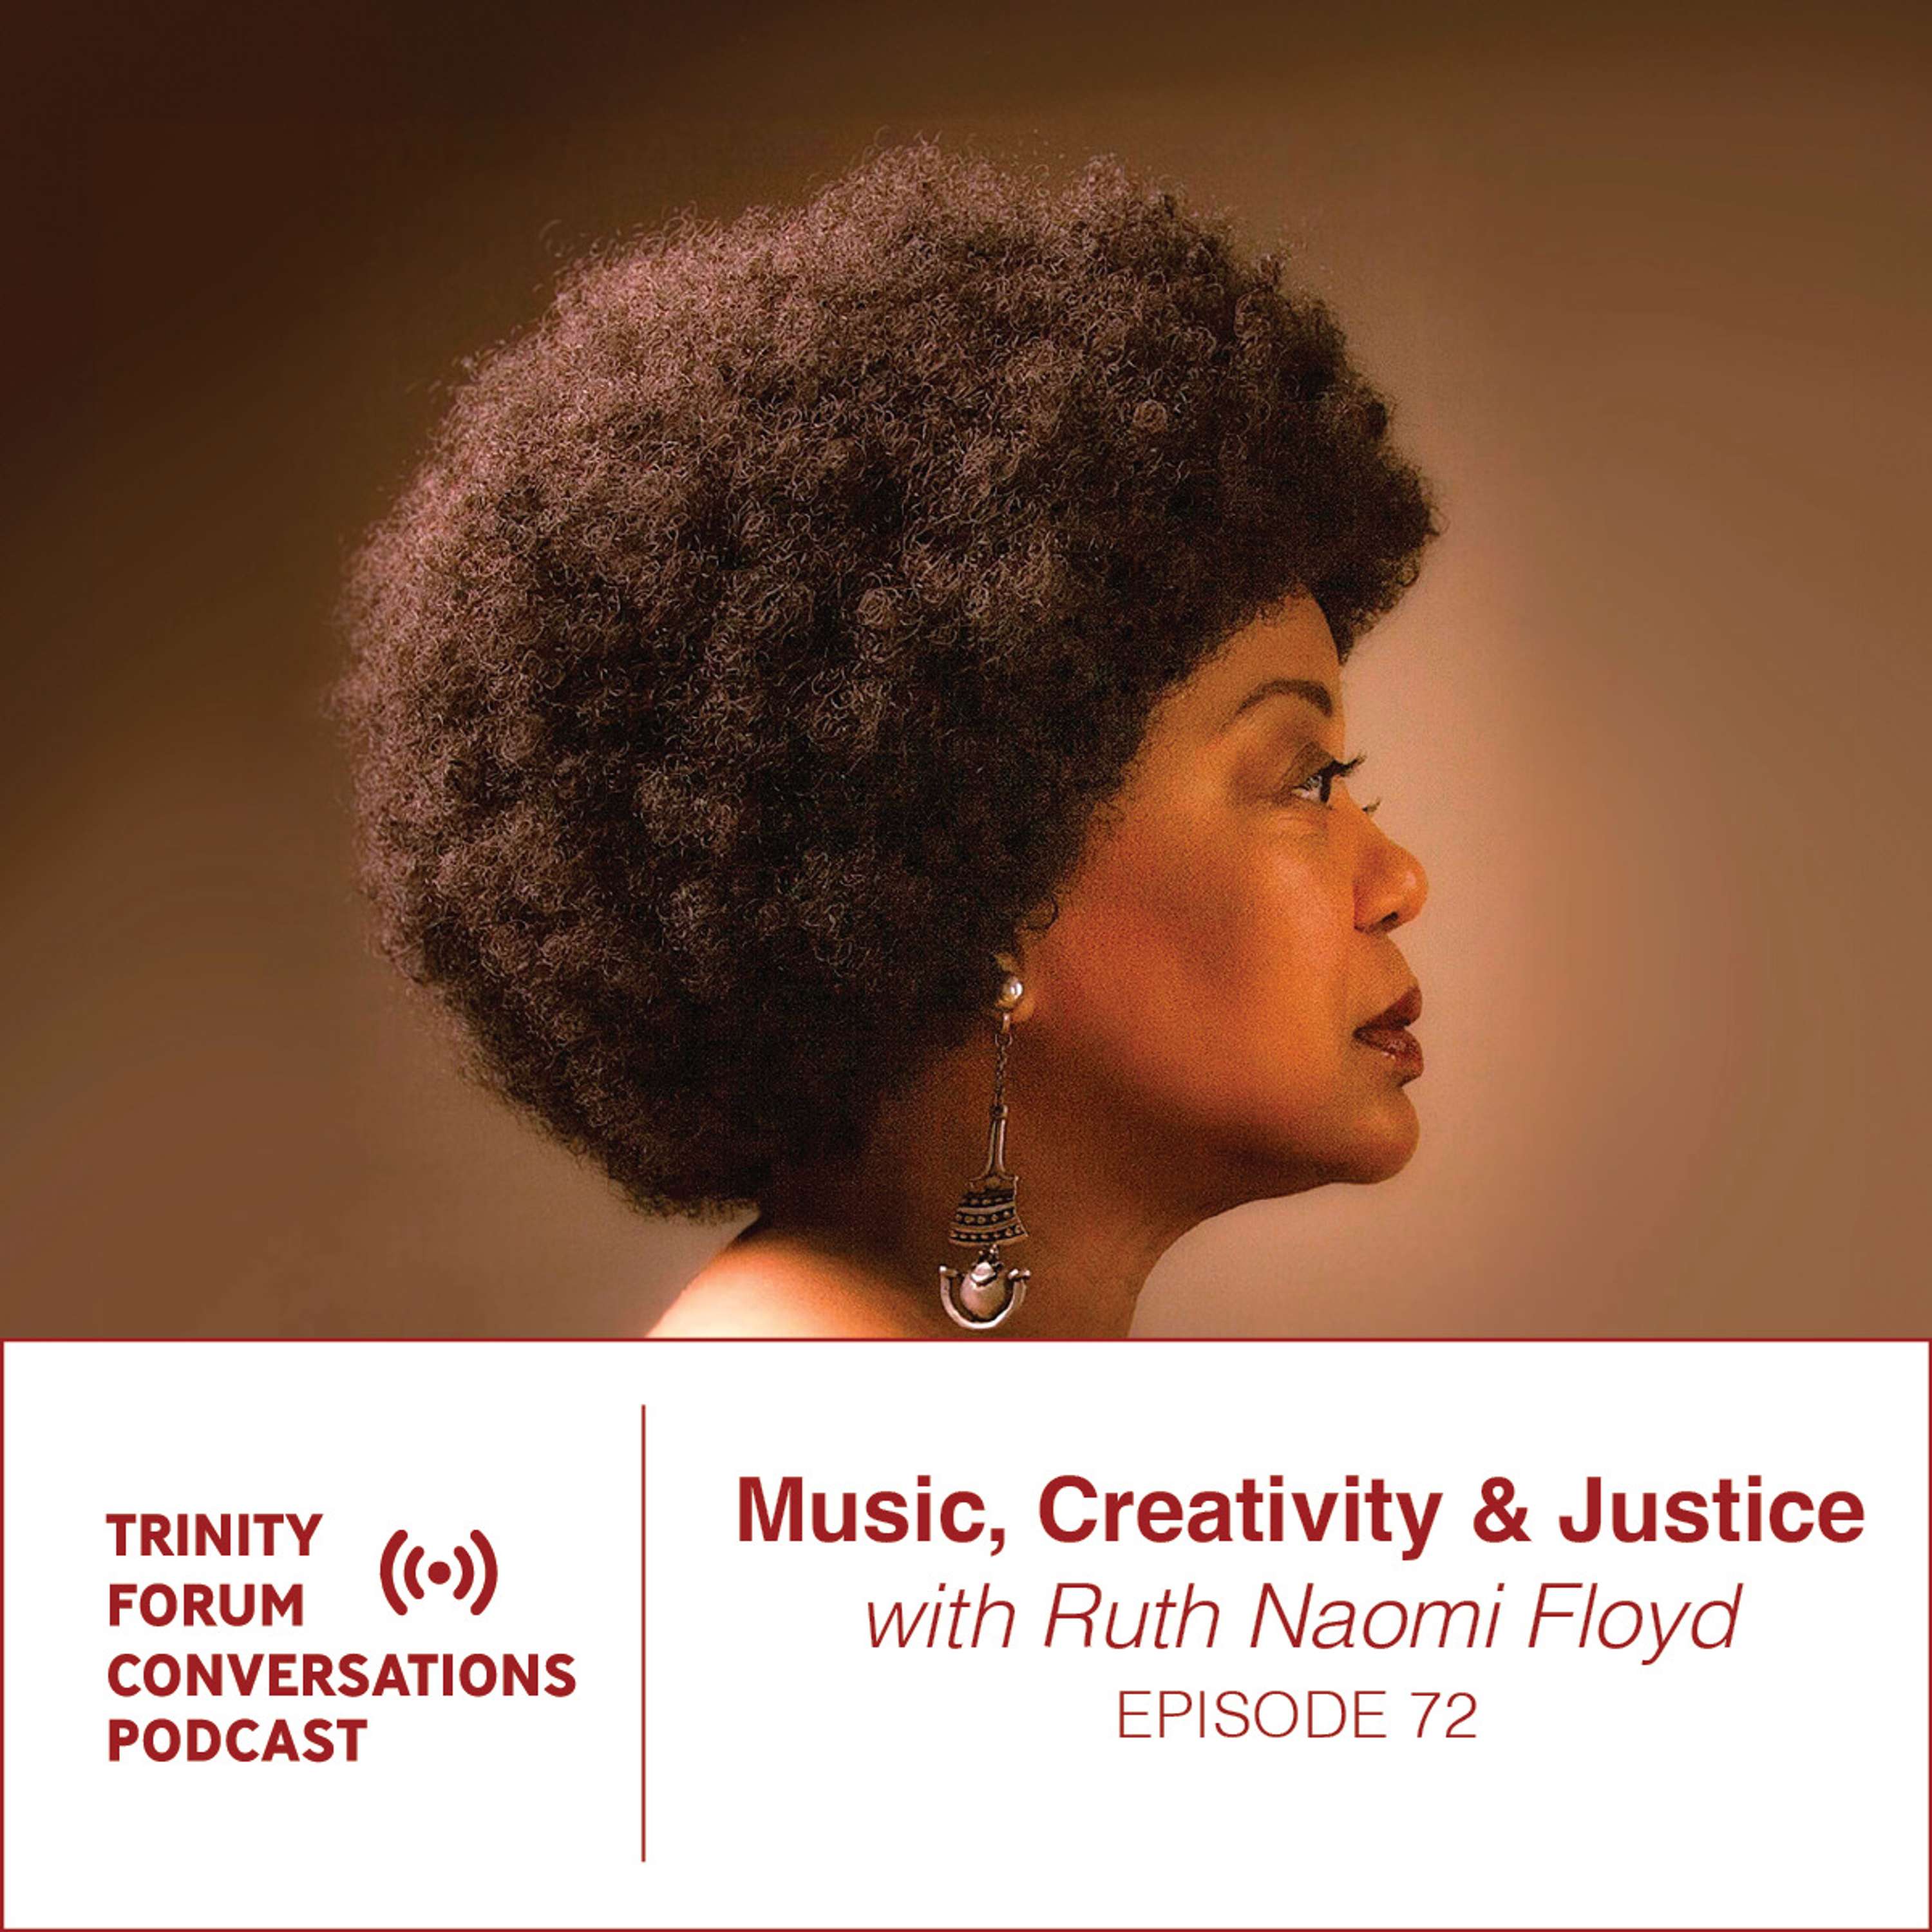 Music, Creativity & Justice with Ruth Naomi Floyd